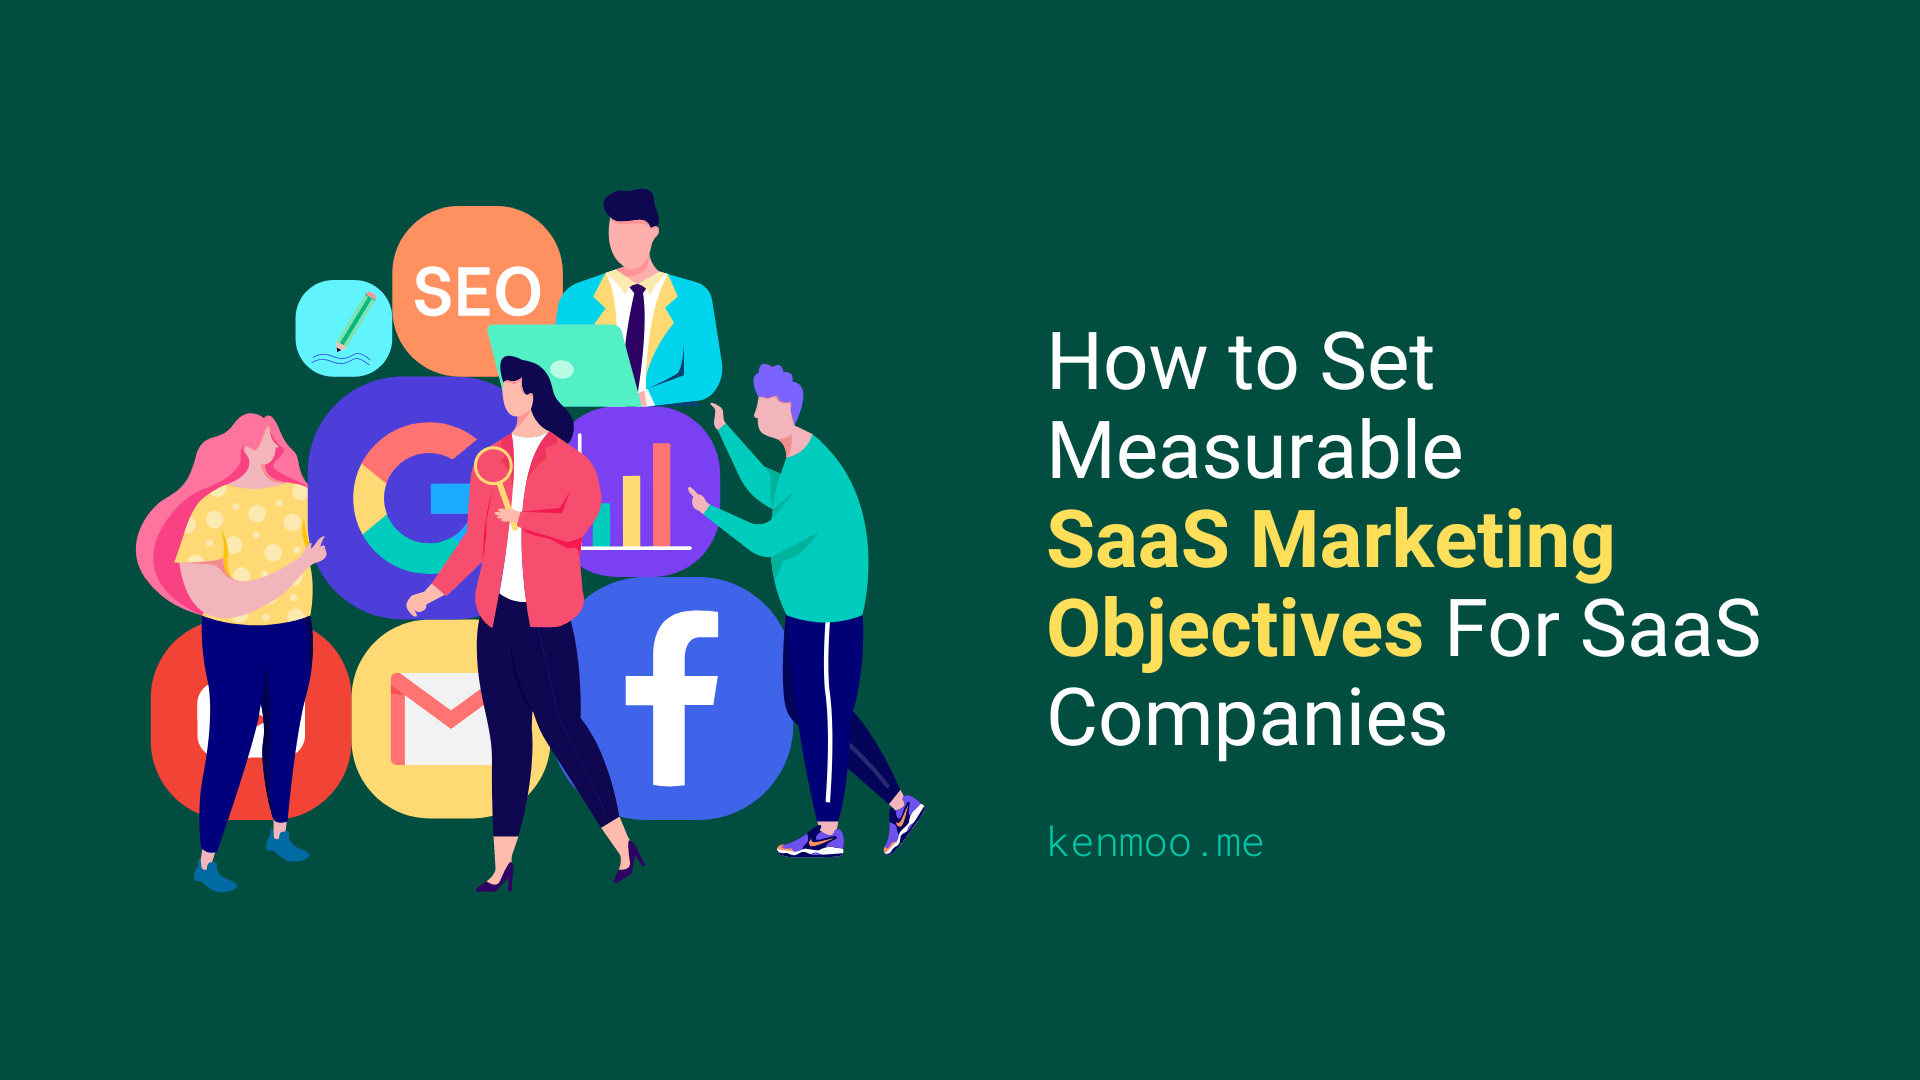 How to Set Measurable SaaS Marketing Objectives For SaaS Companies